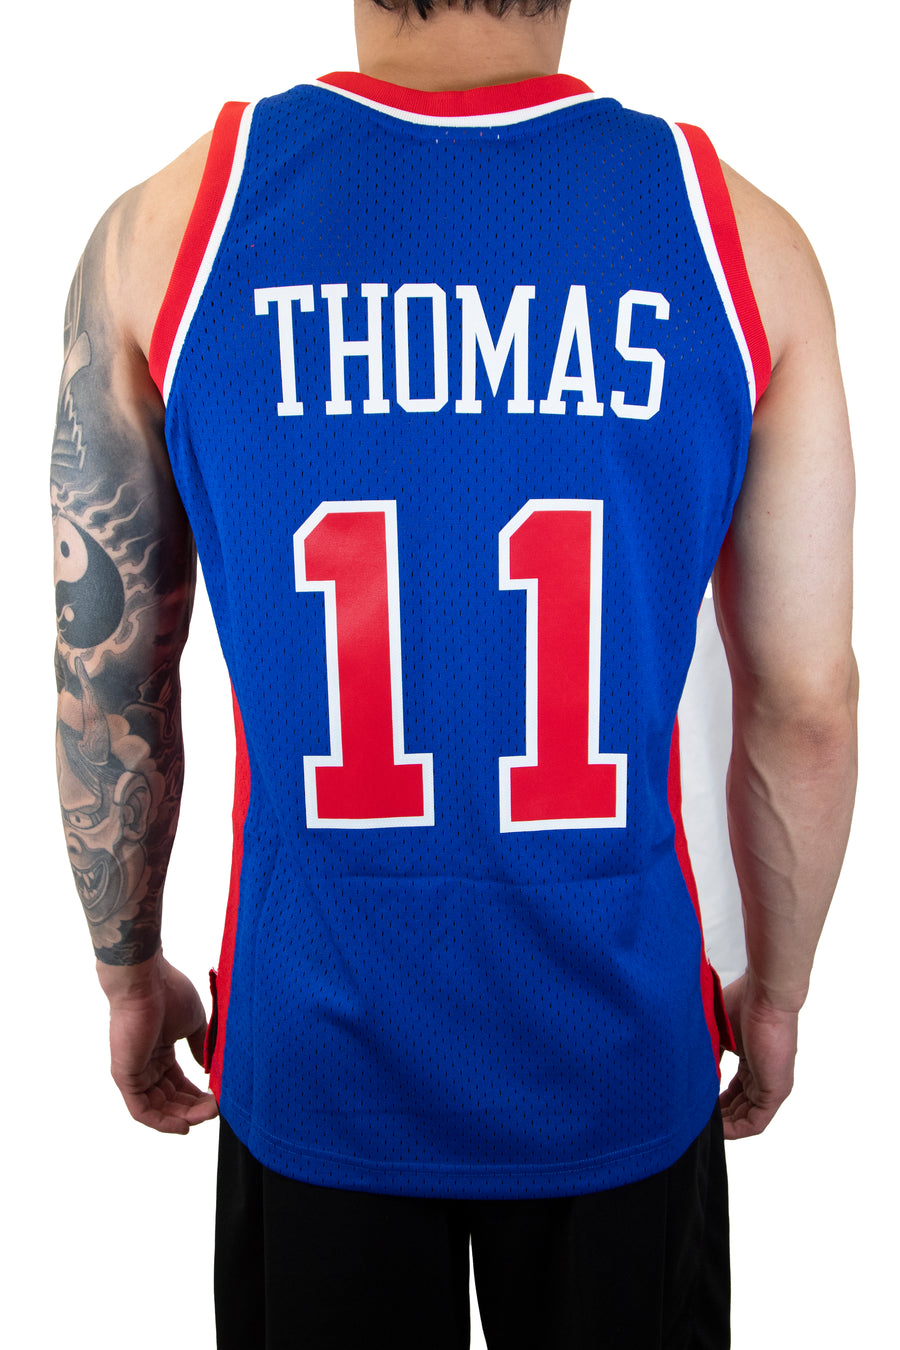 Mitchell & Ness NBA Detroit Pistons Jersey (Isiah Thomas) - Blue/Red